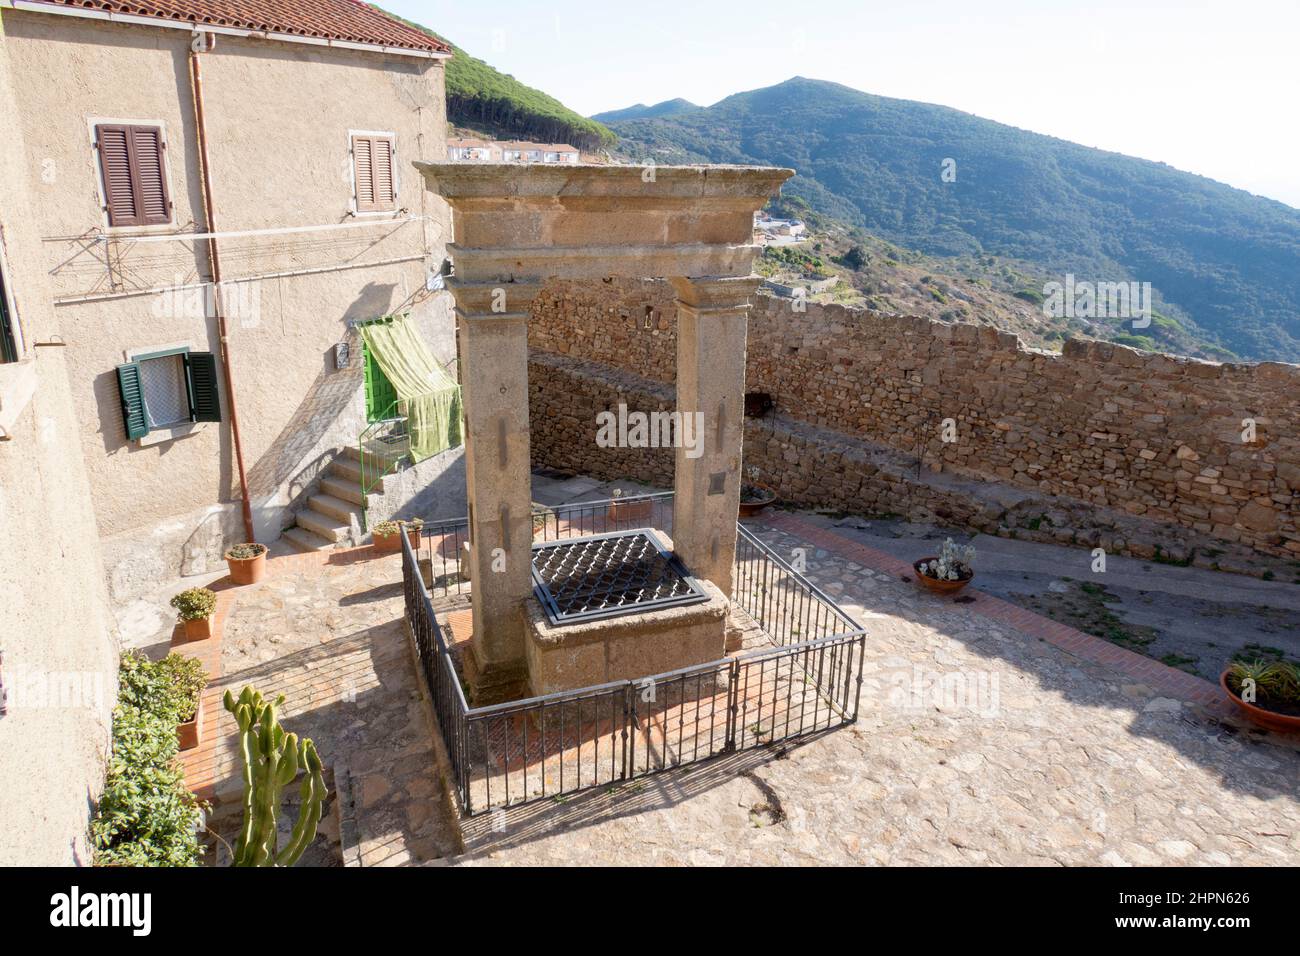 Ancient well, Giglio Castello village, Giglio Island, Tyrrhenian Sea, Tuscan archipelago, Tuscany, Italy, Europe Stock Photo